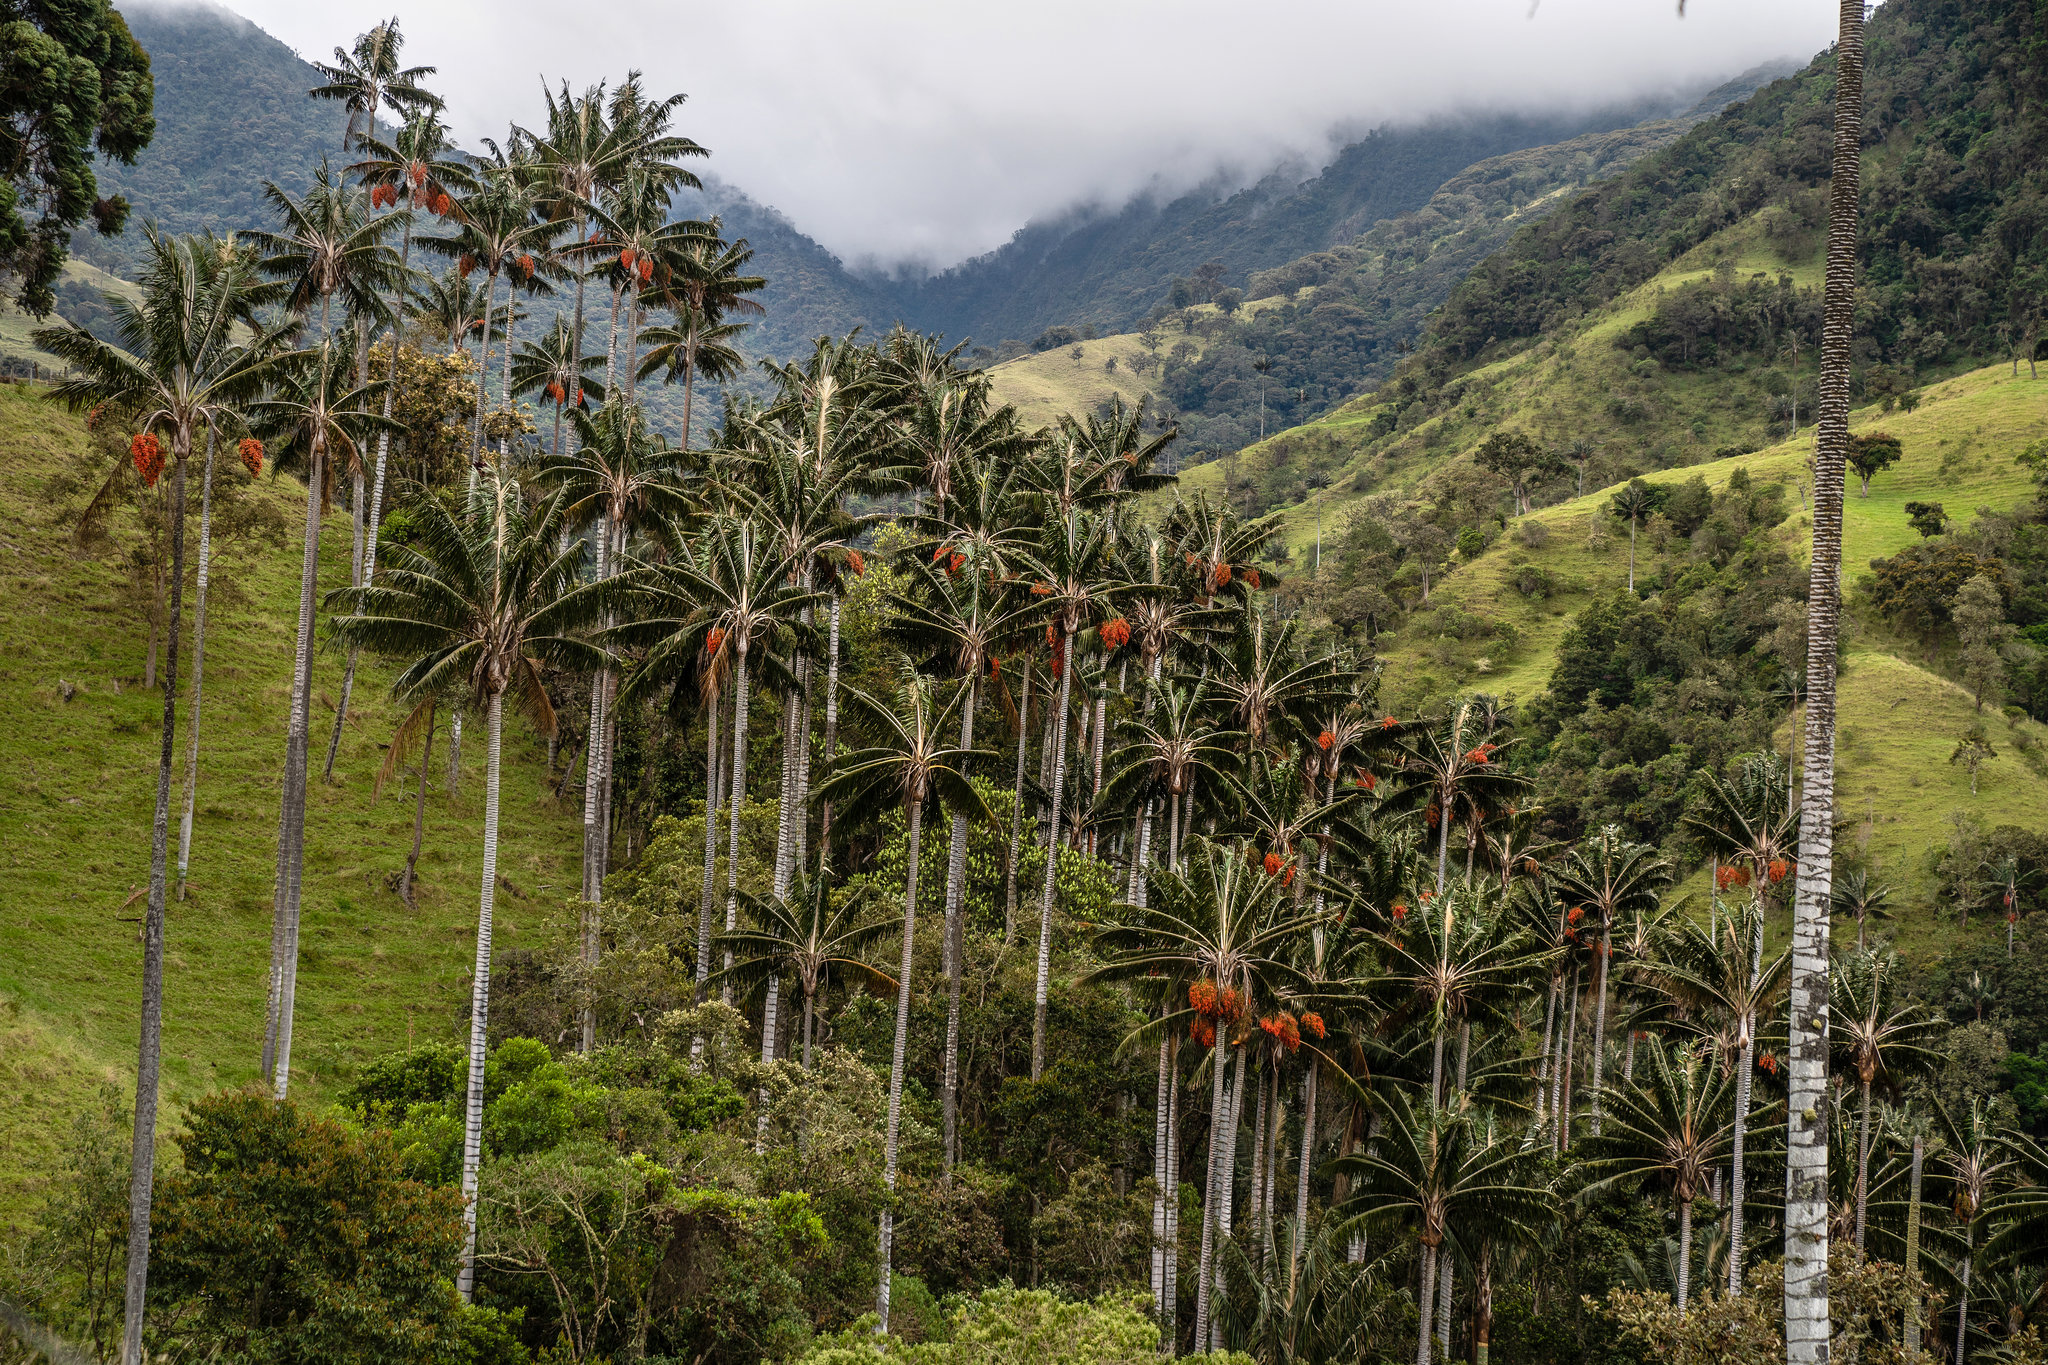 Promo Jardin Élégant Stalking the Endangered Wax Palm the New York Times